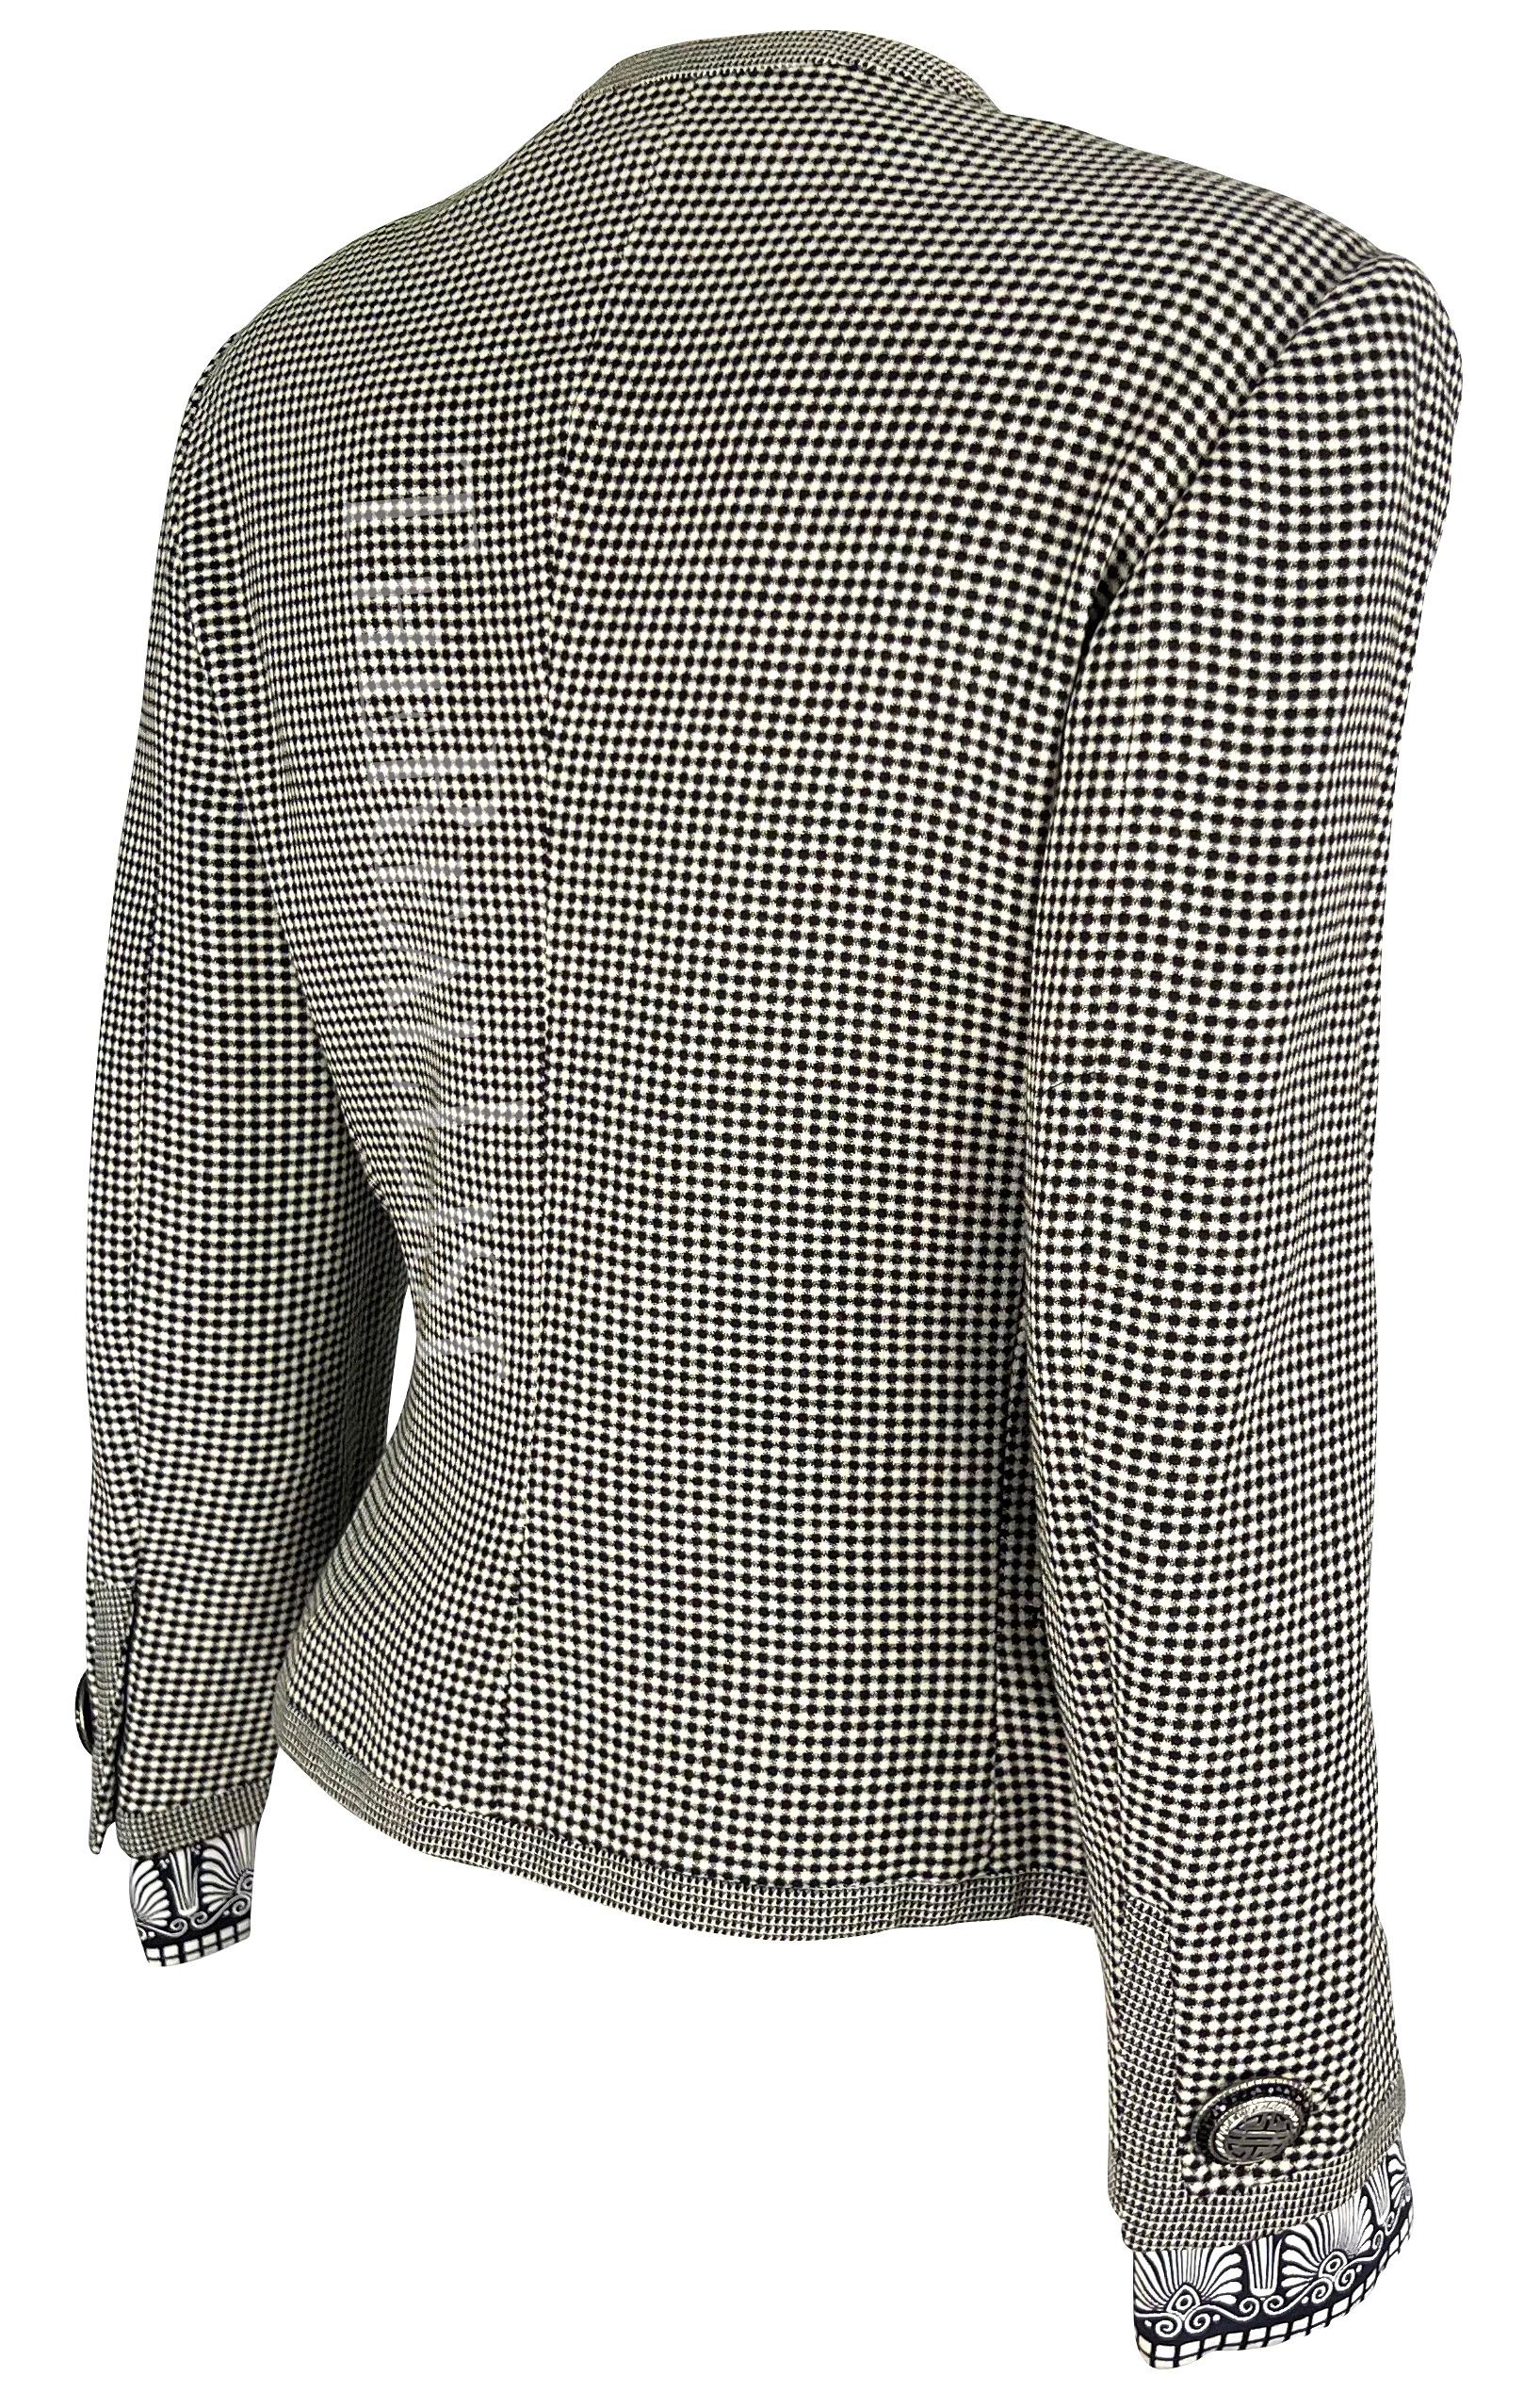 S/S 1992 Gianni Versace Black White Checkered Rhinestone Baroque Jacket For Sale 1